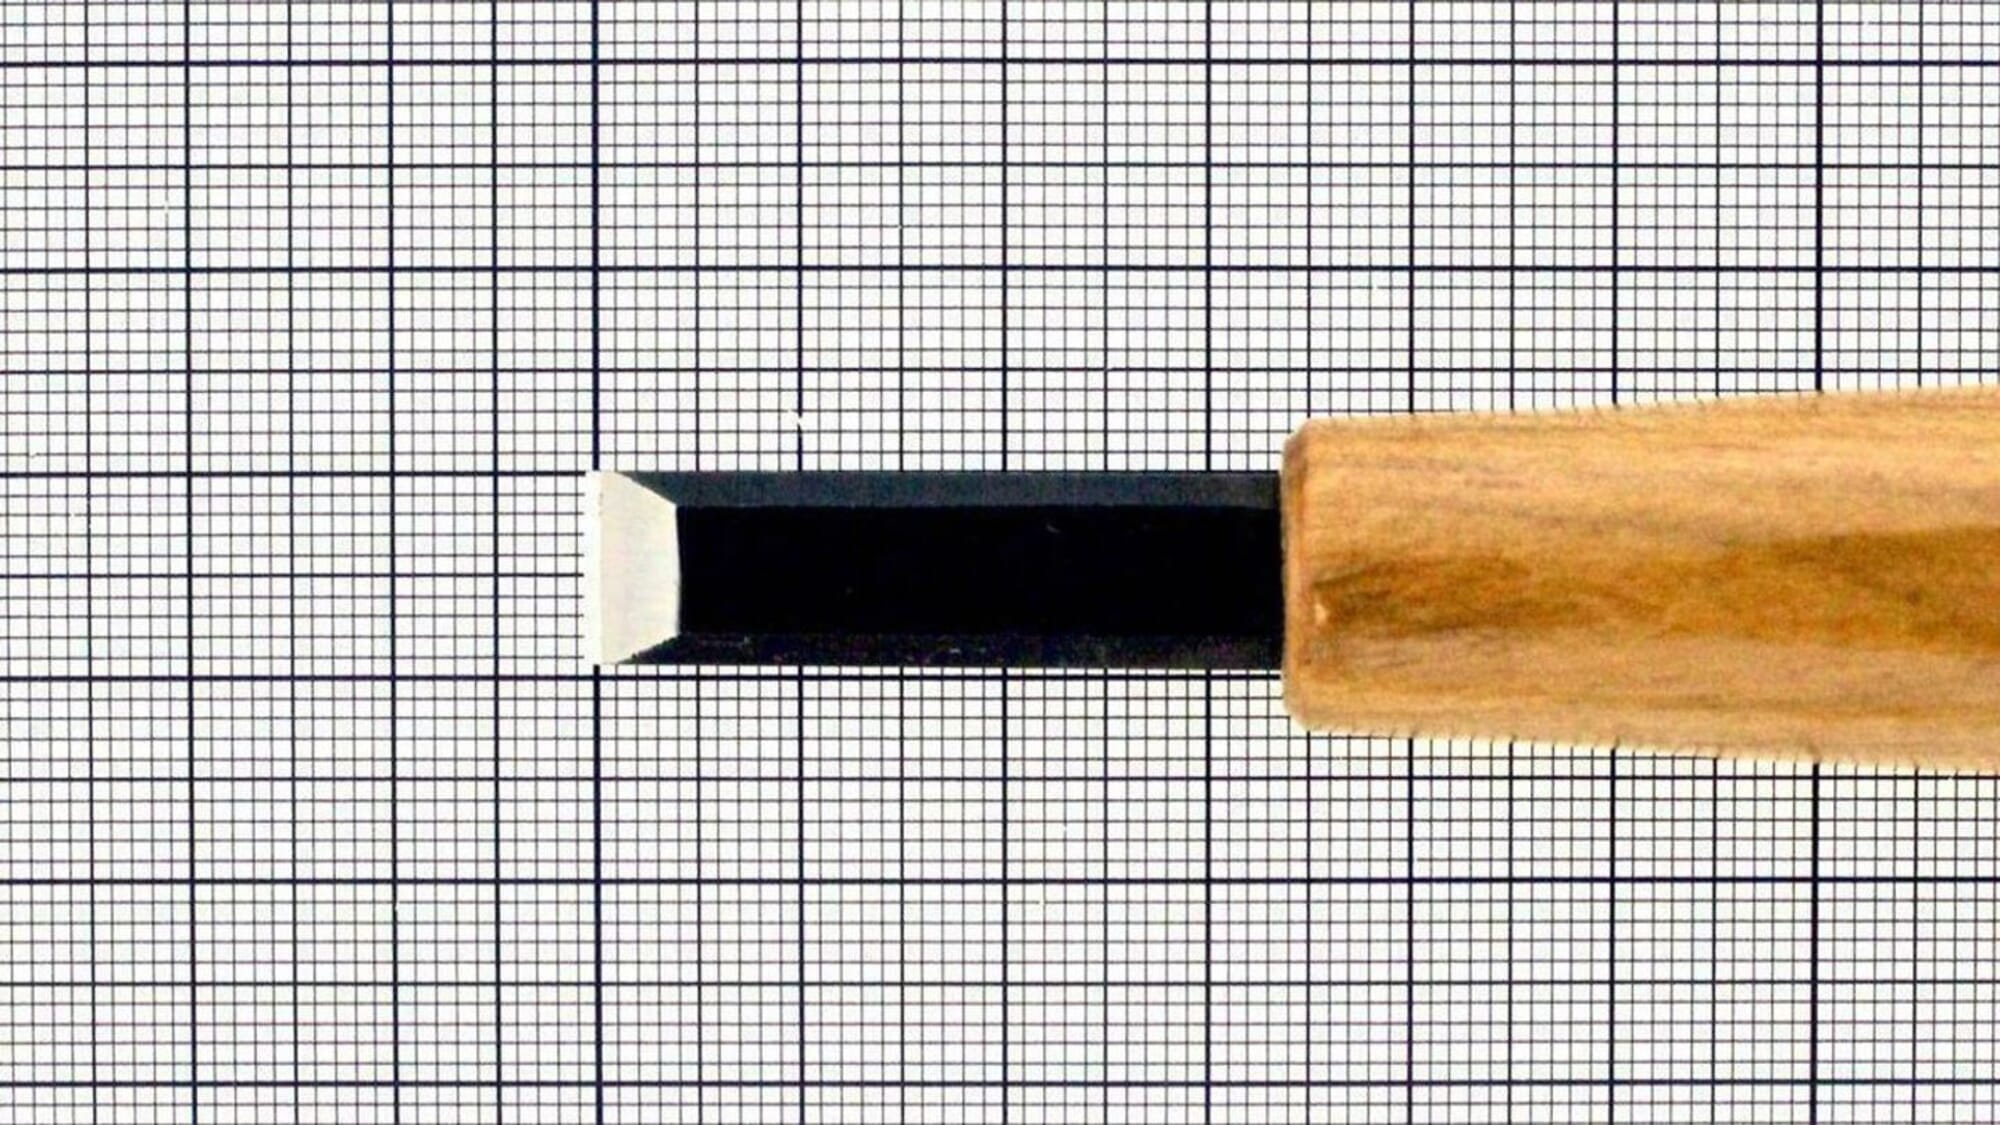 Michihamono 130mm Mokuhanga Pressing Burnishing Tool Round Disk Sosaku Bamboo Beta Baren, with Bamboo Leaf Cover, for Woodblock Printing